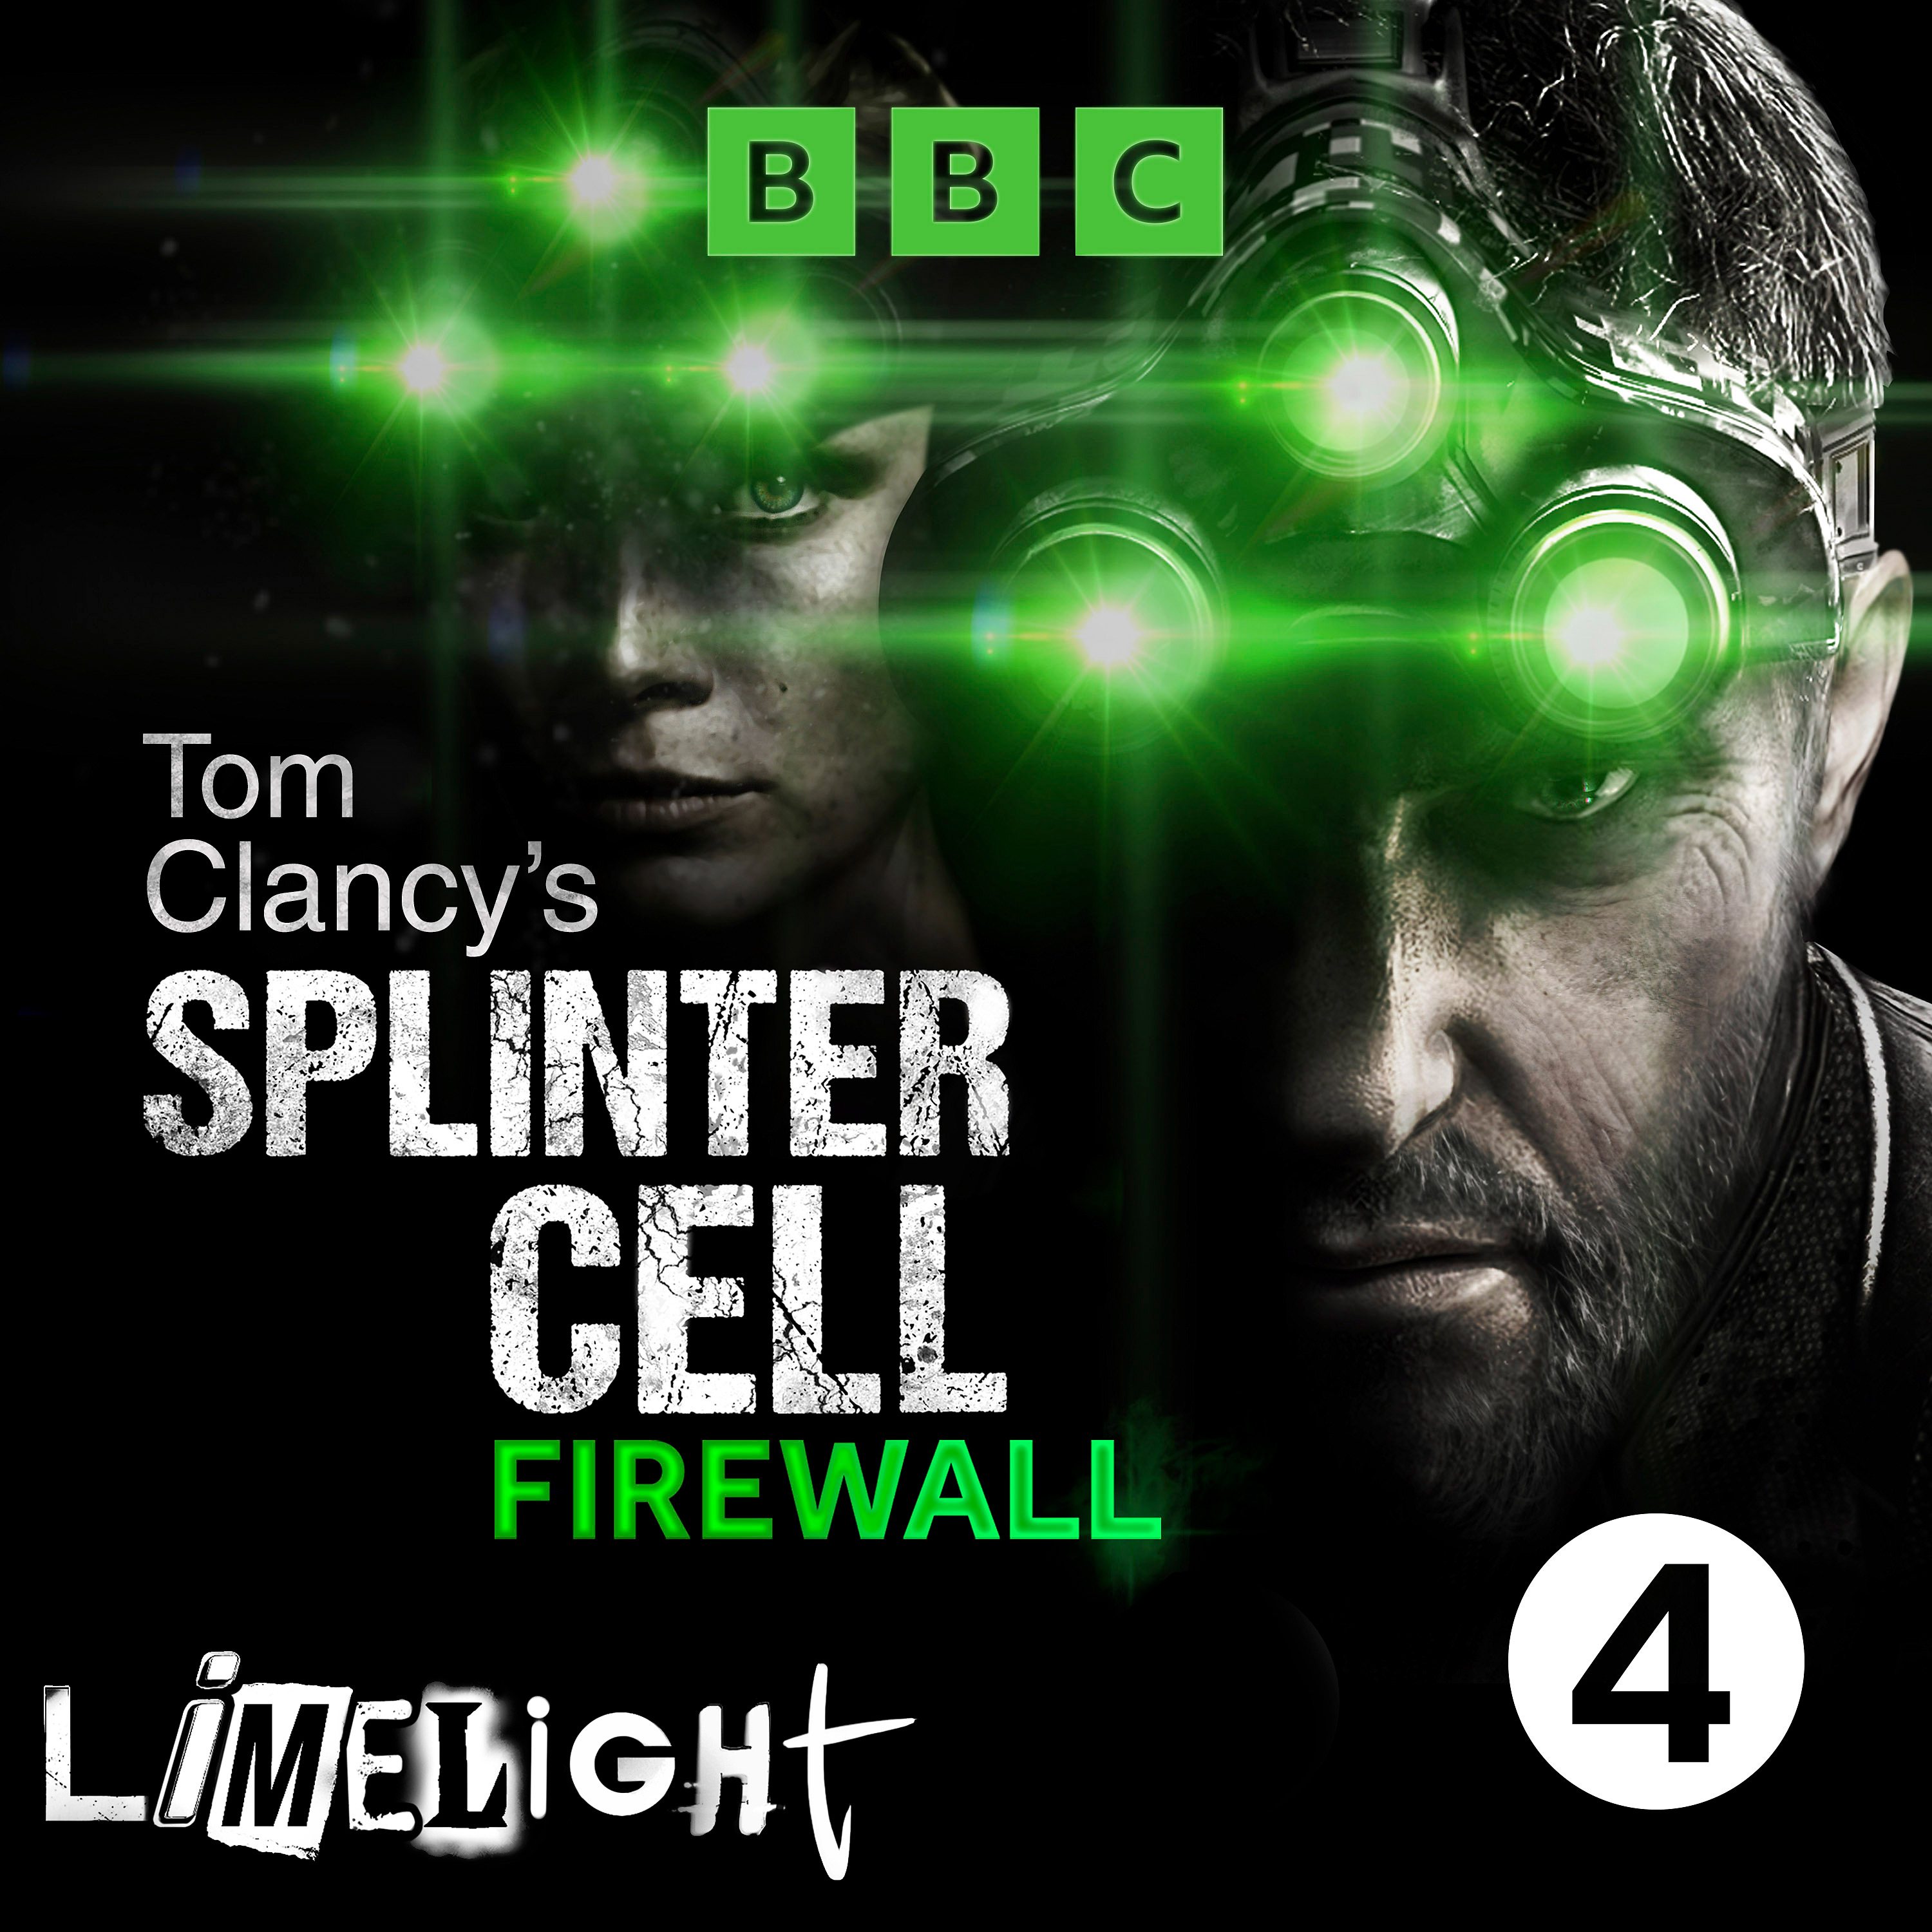 Tom Clancy’s Splinter Cell: Firewall, Episode 5